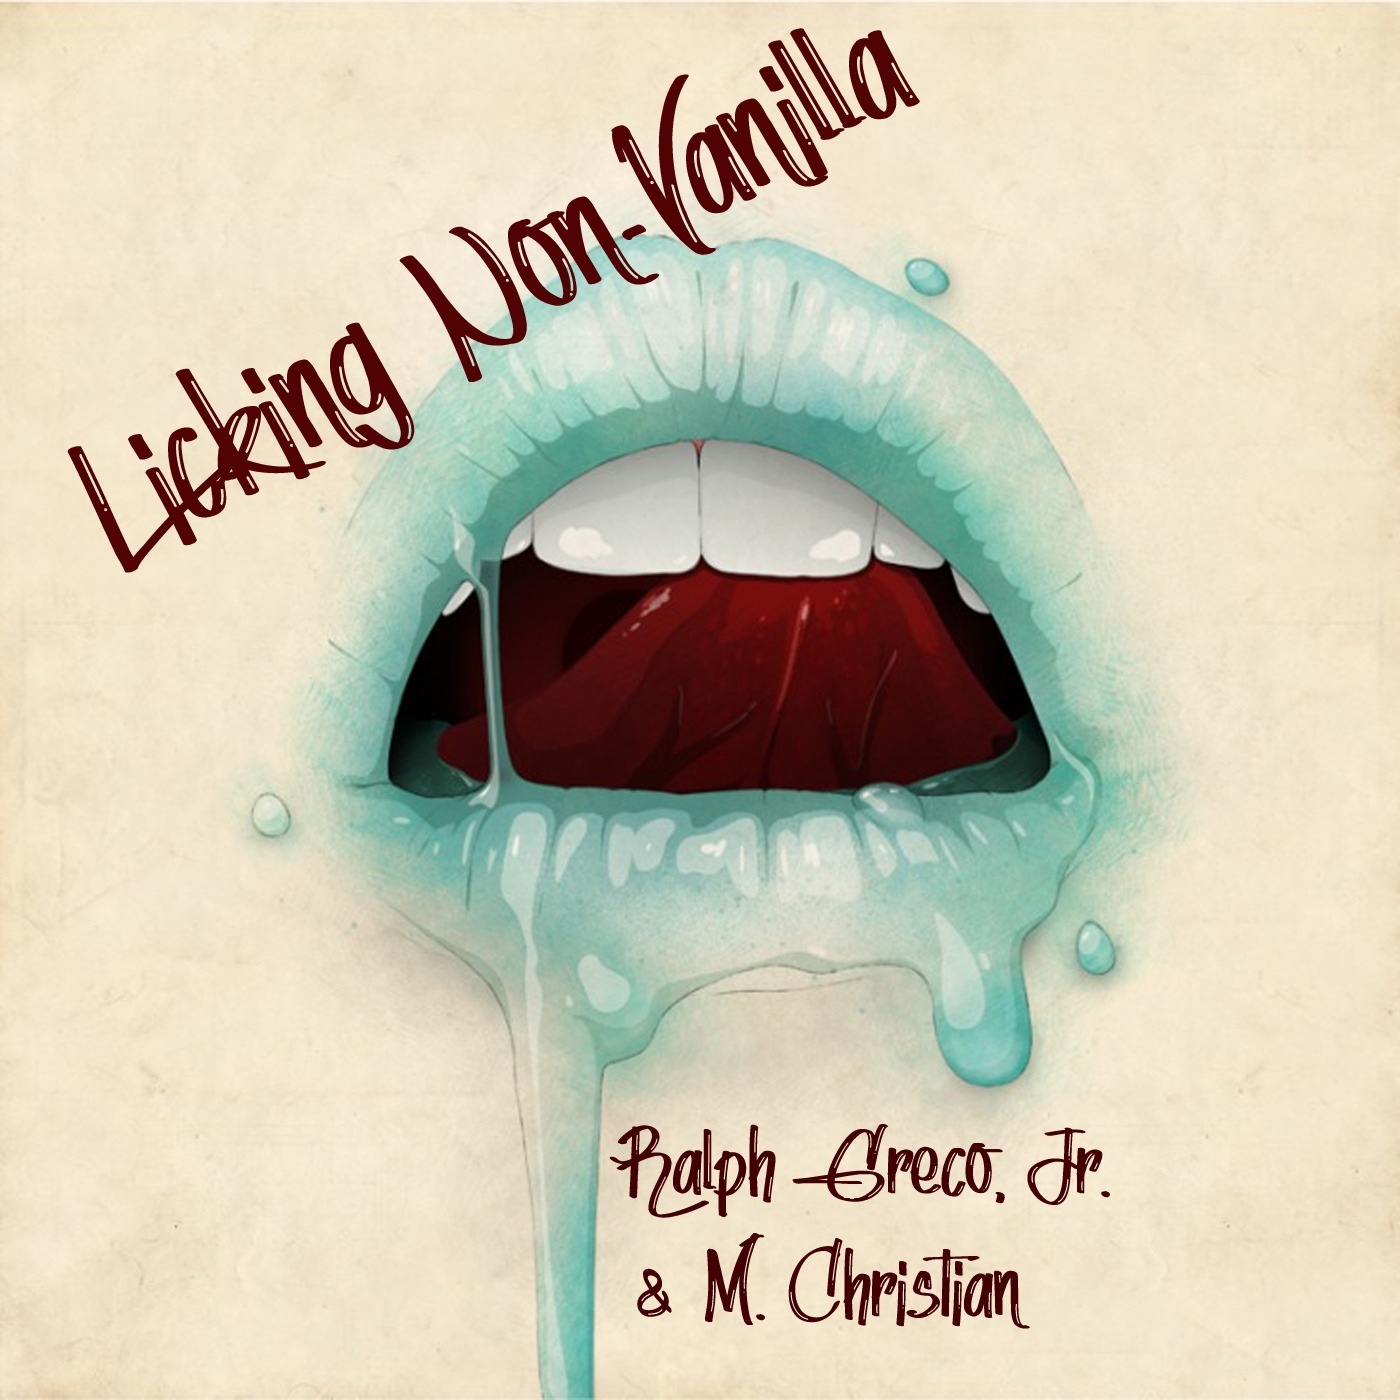 Licking Non-Vanilla - 35-The Return of Miss Ava